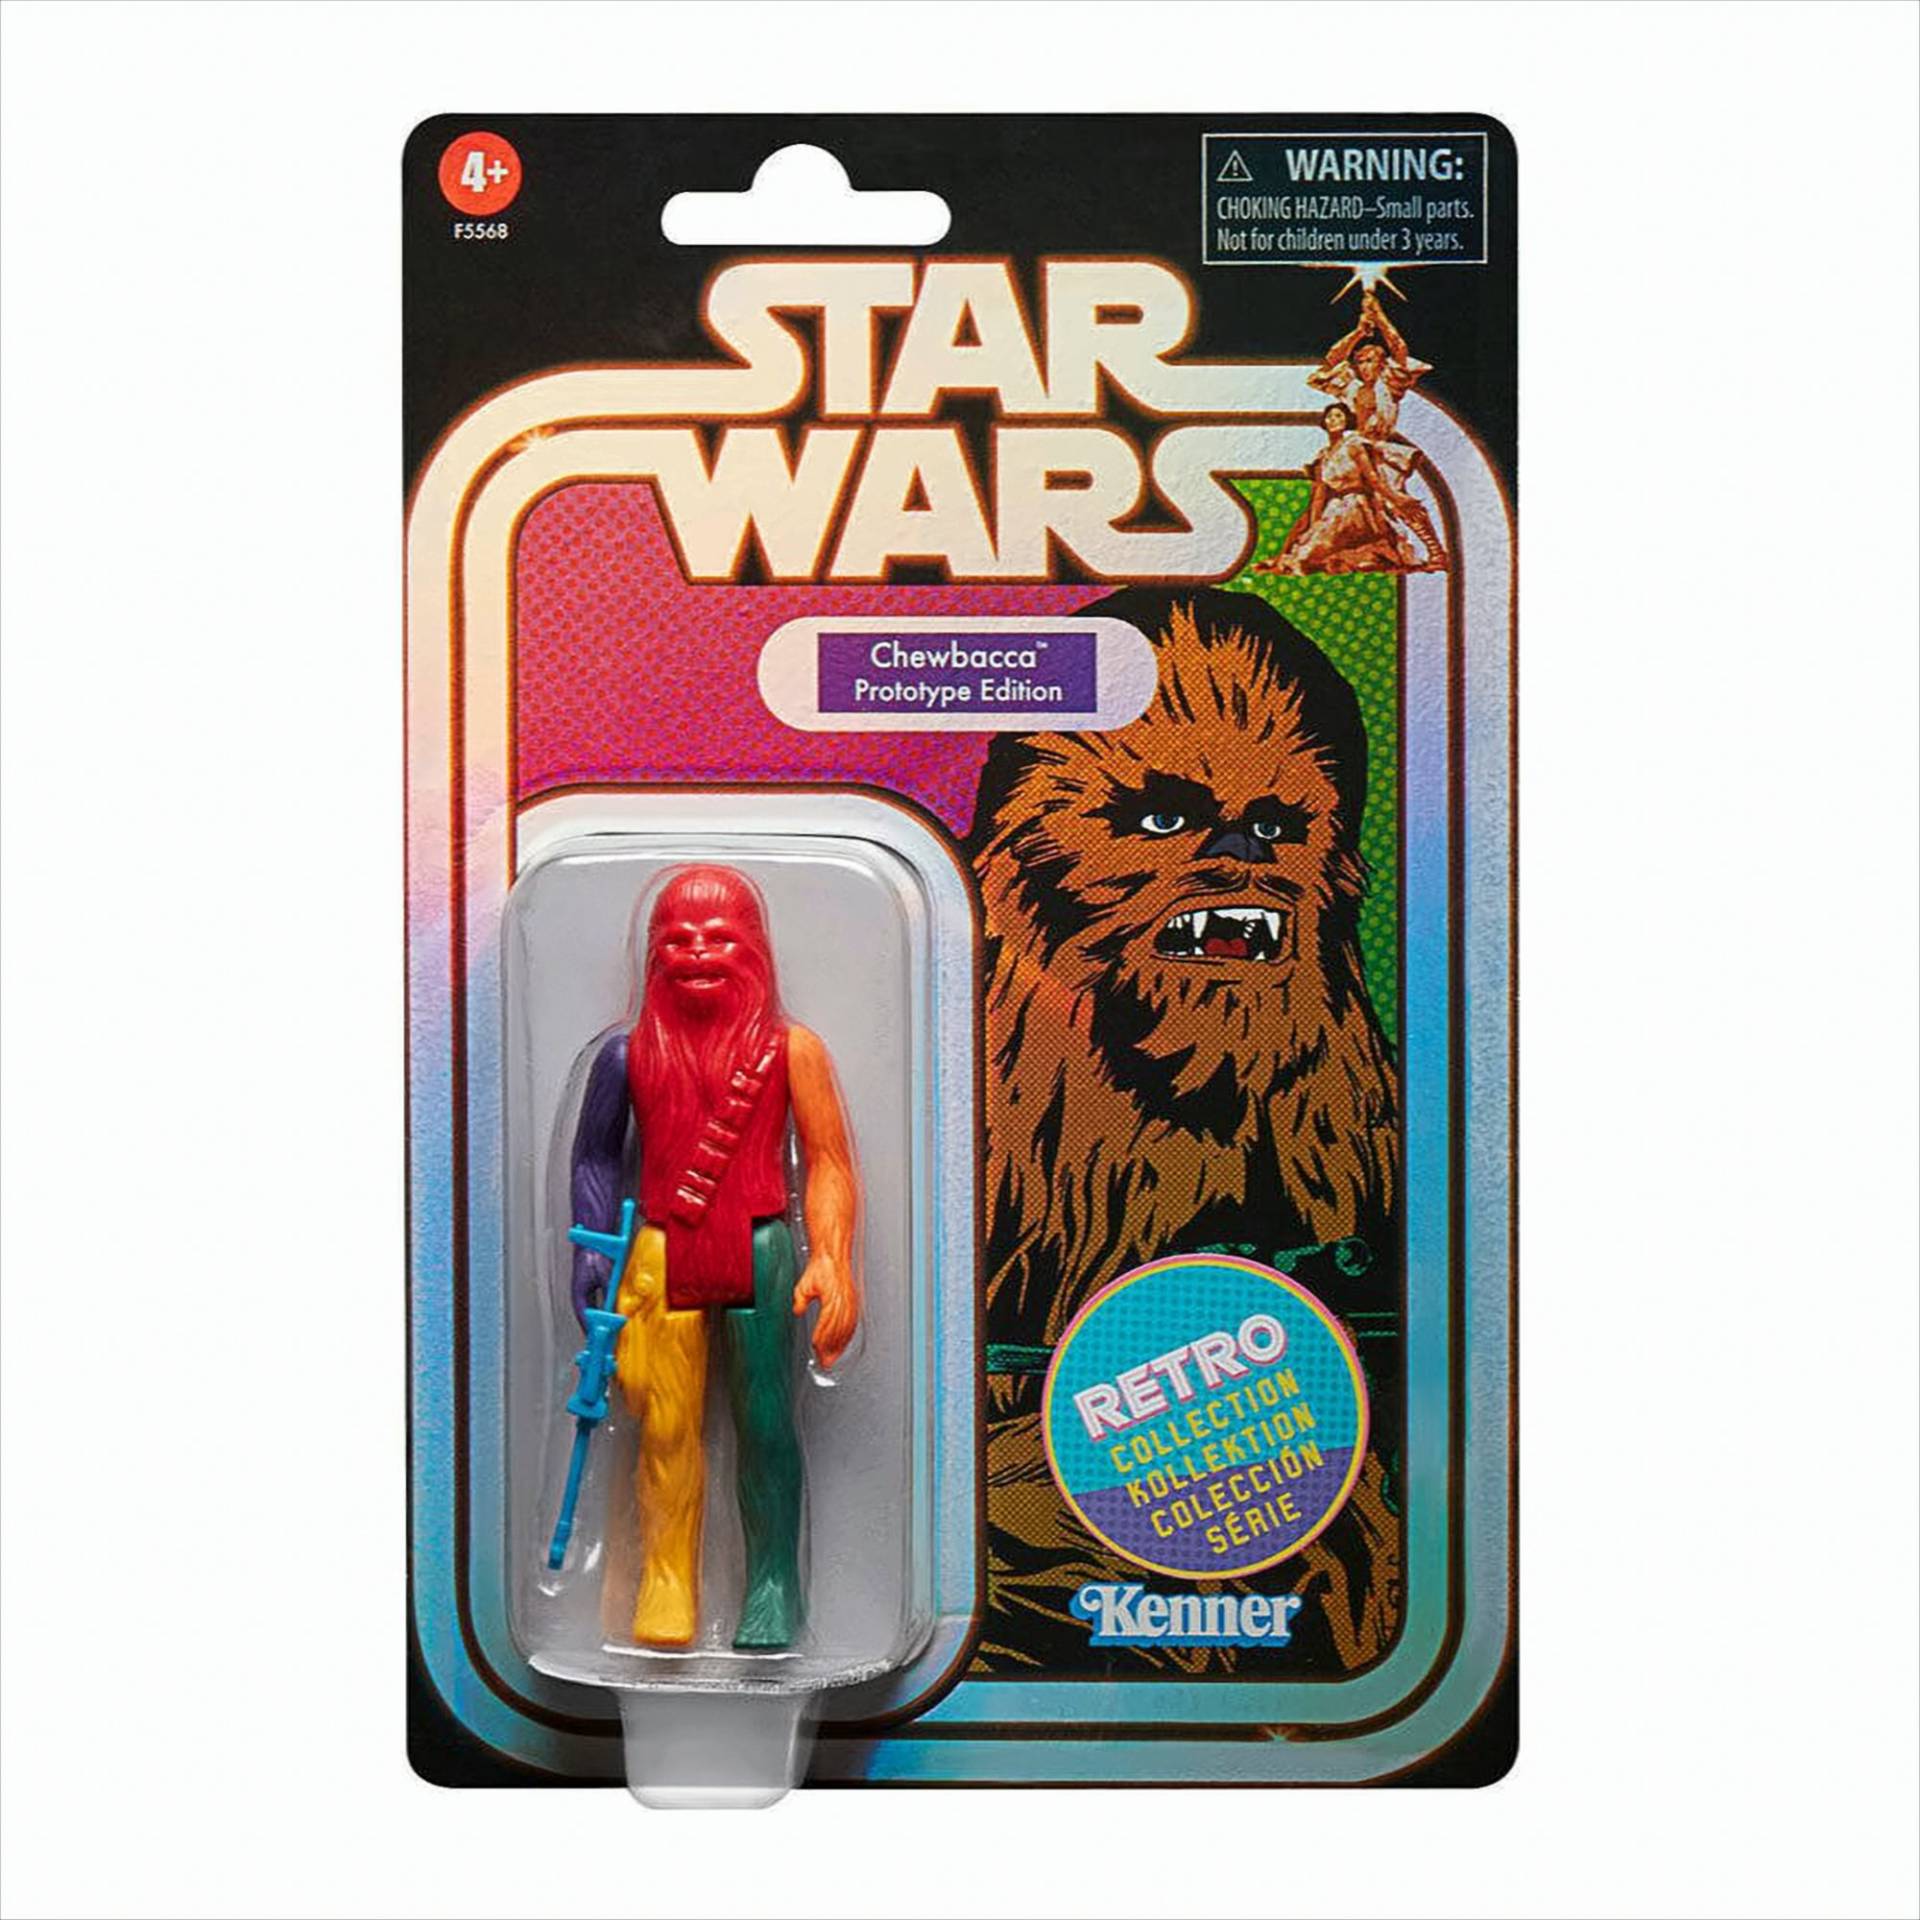 Star Wars - Chewbacca Prototype Edition von Hasbro